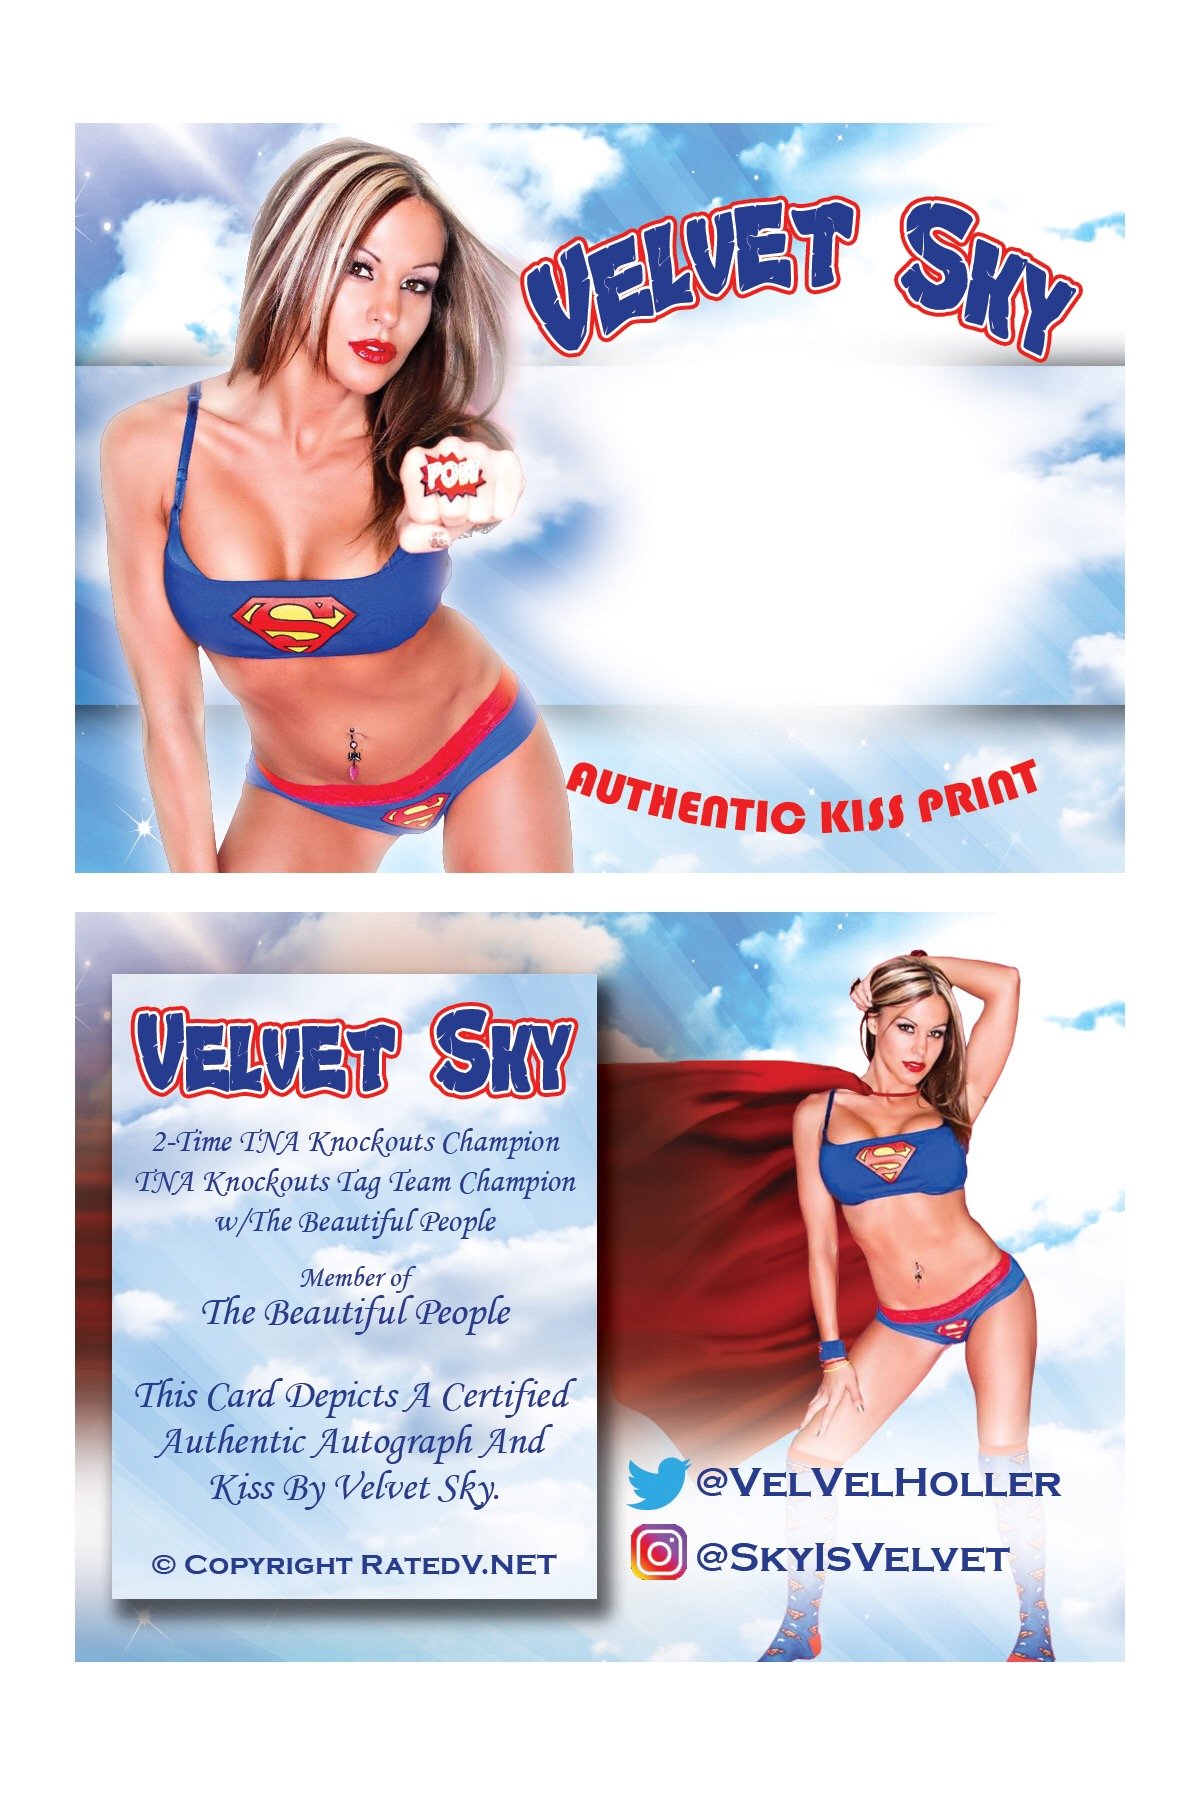 Image of Velvet Sky “Supergirl” Authentic Kiss Card plus VIDEO